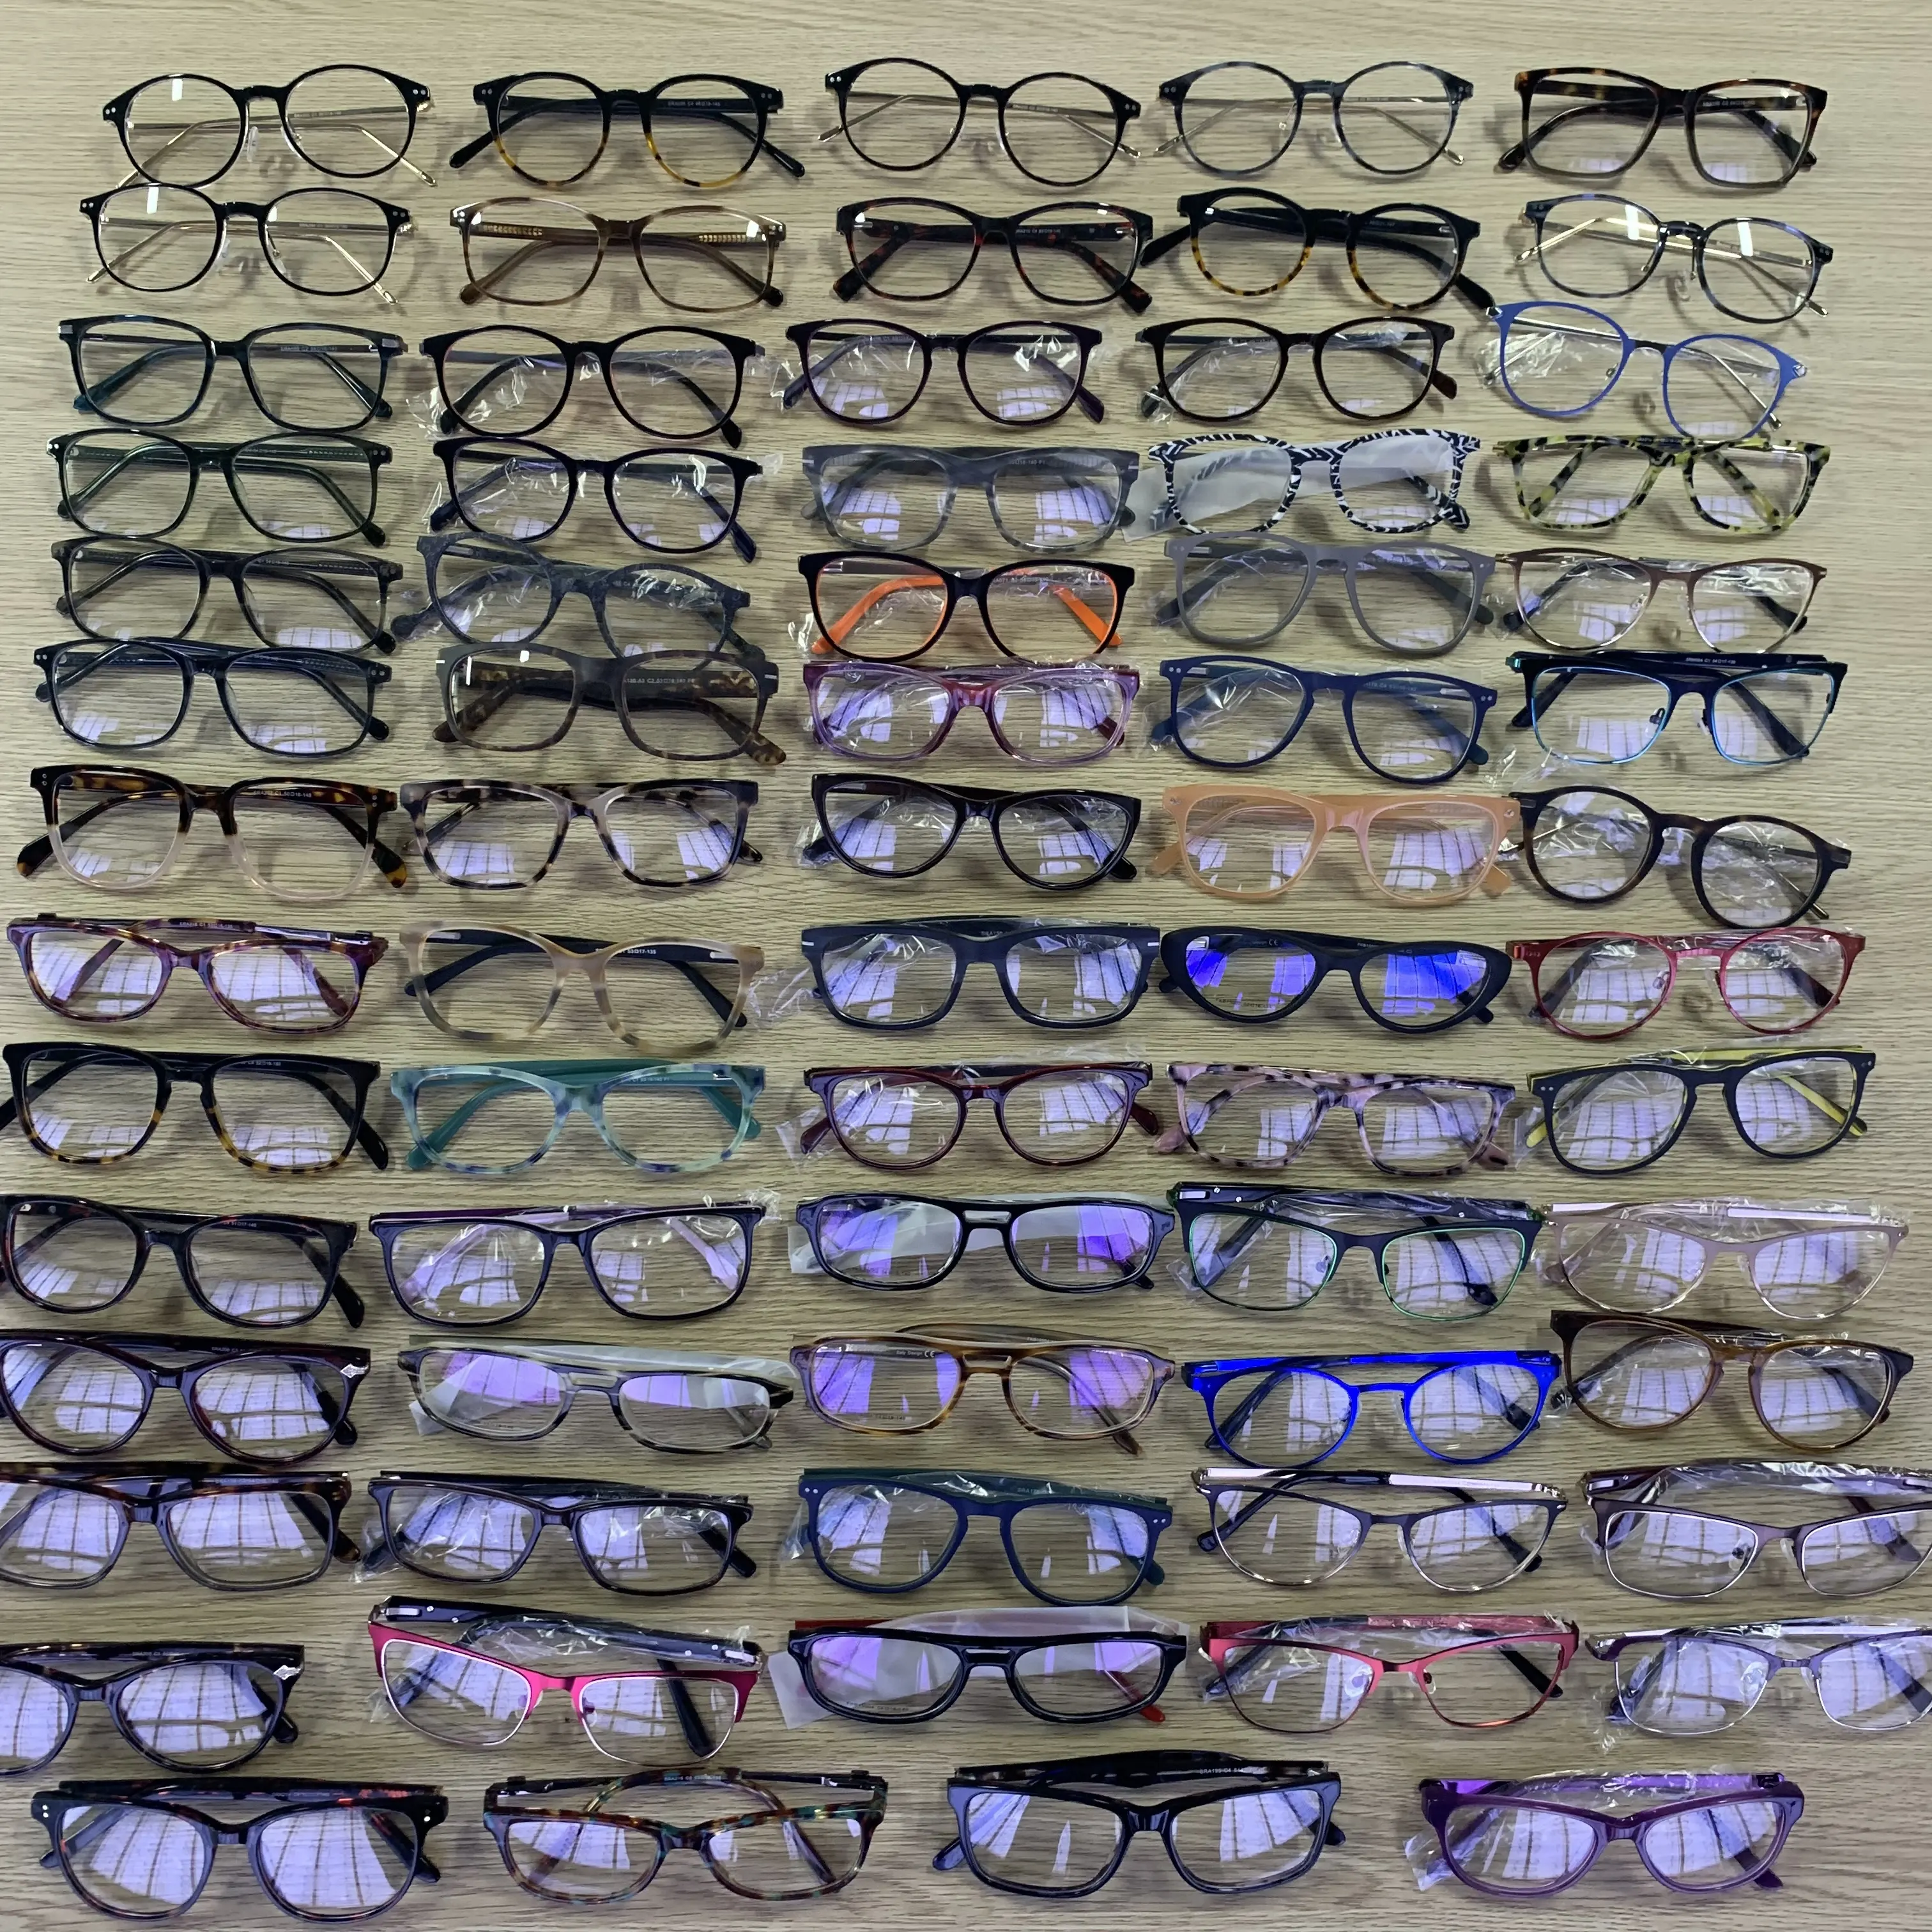 Assorted Ready Made Mixed Eyewear Stock Cheap Glasses Acetate Optical Eyeglasses Frames